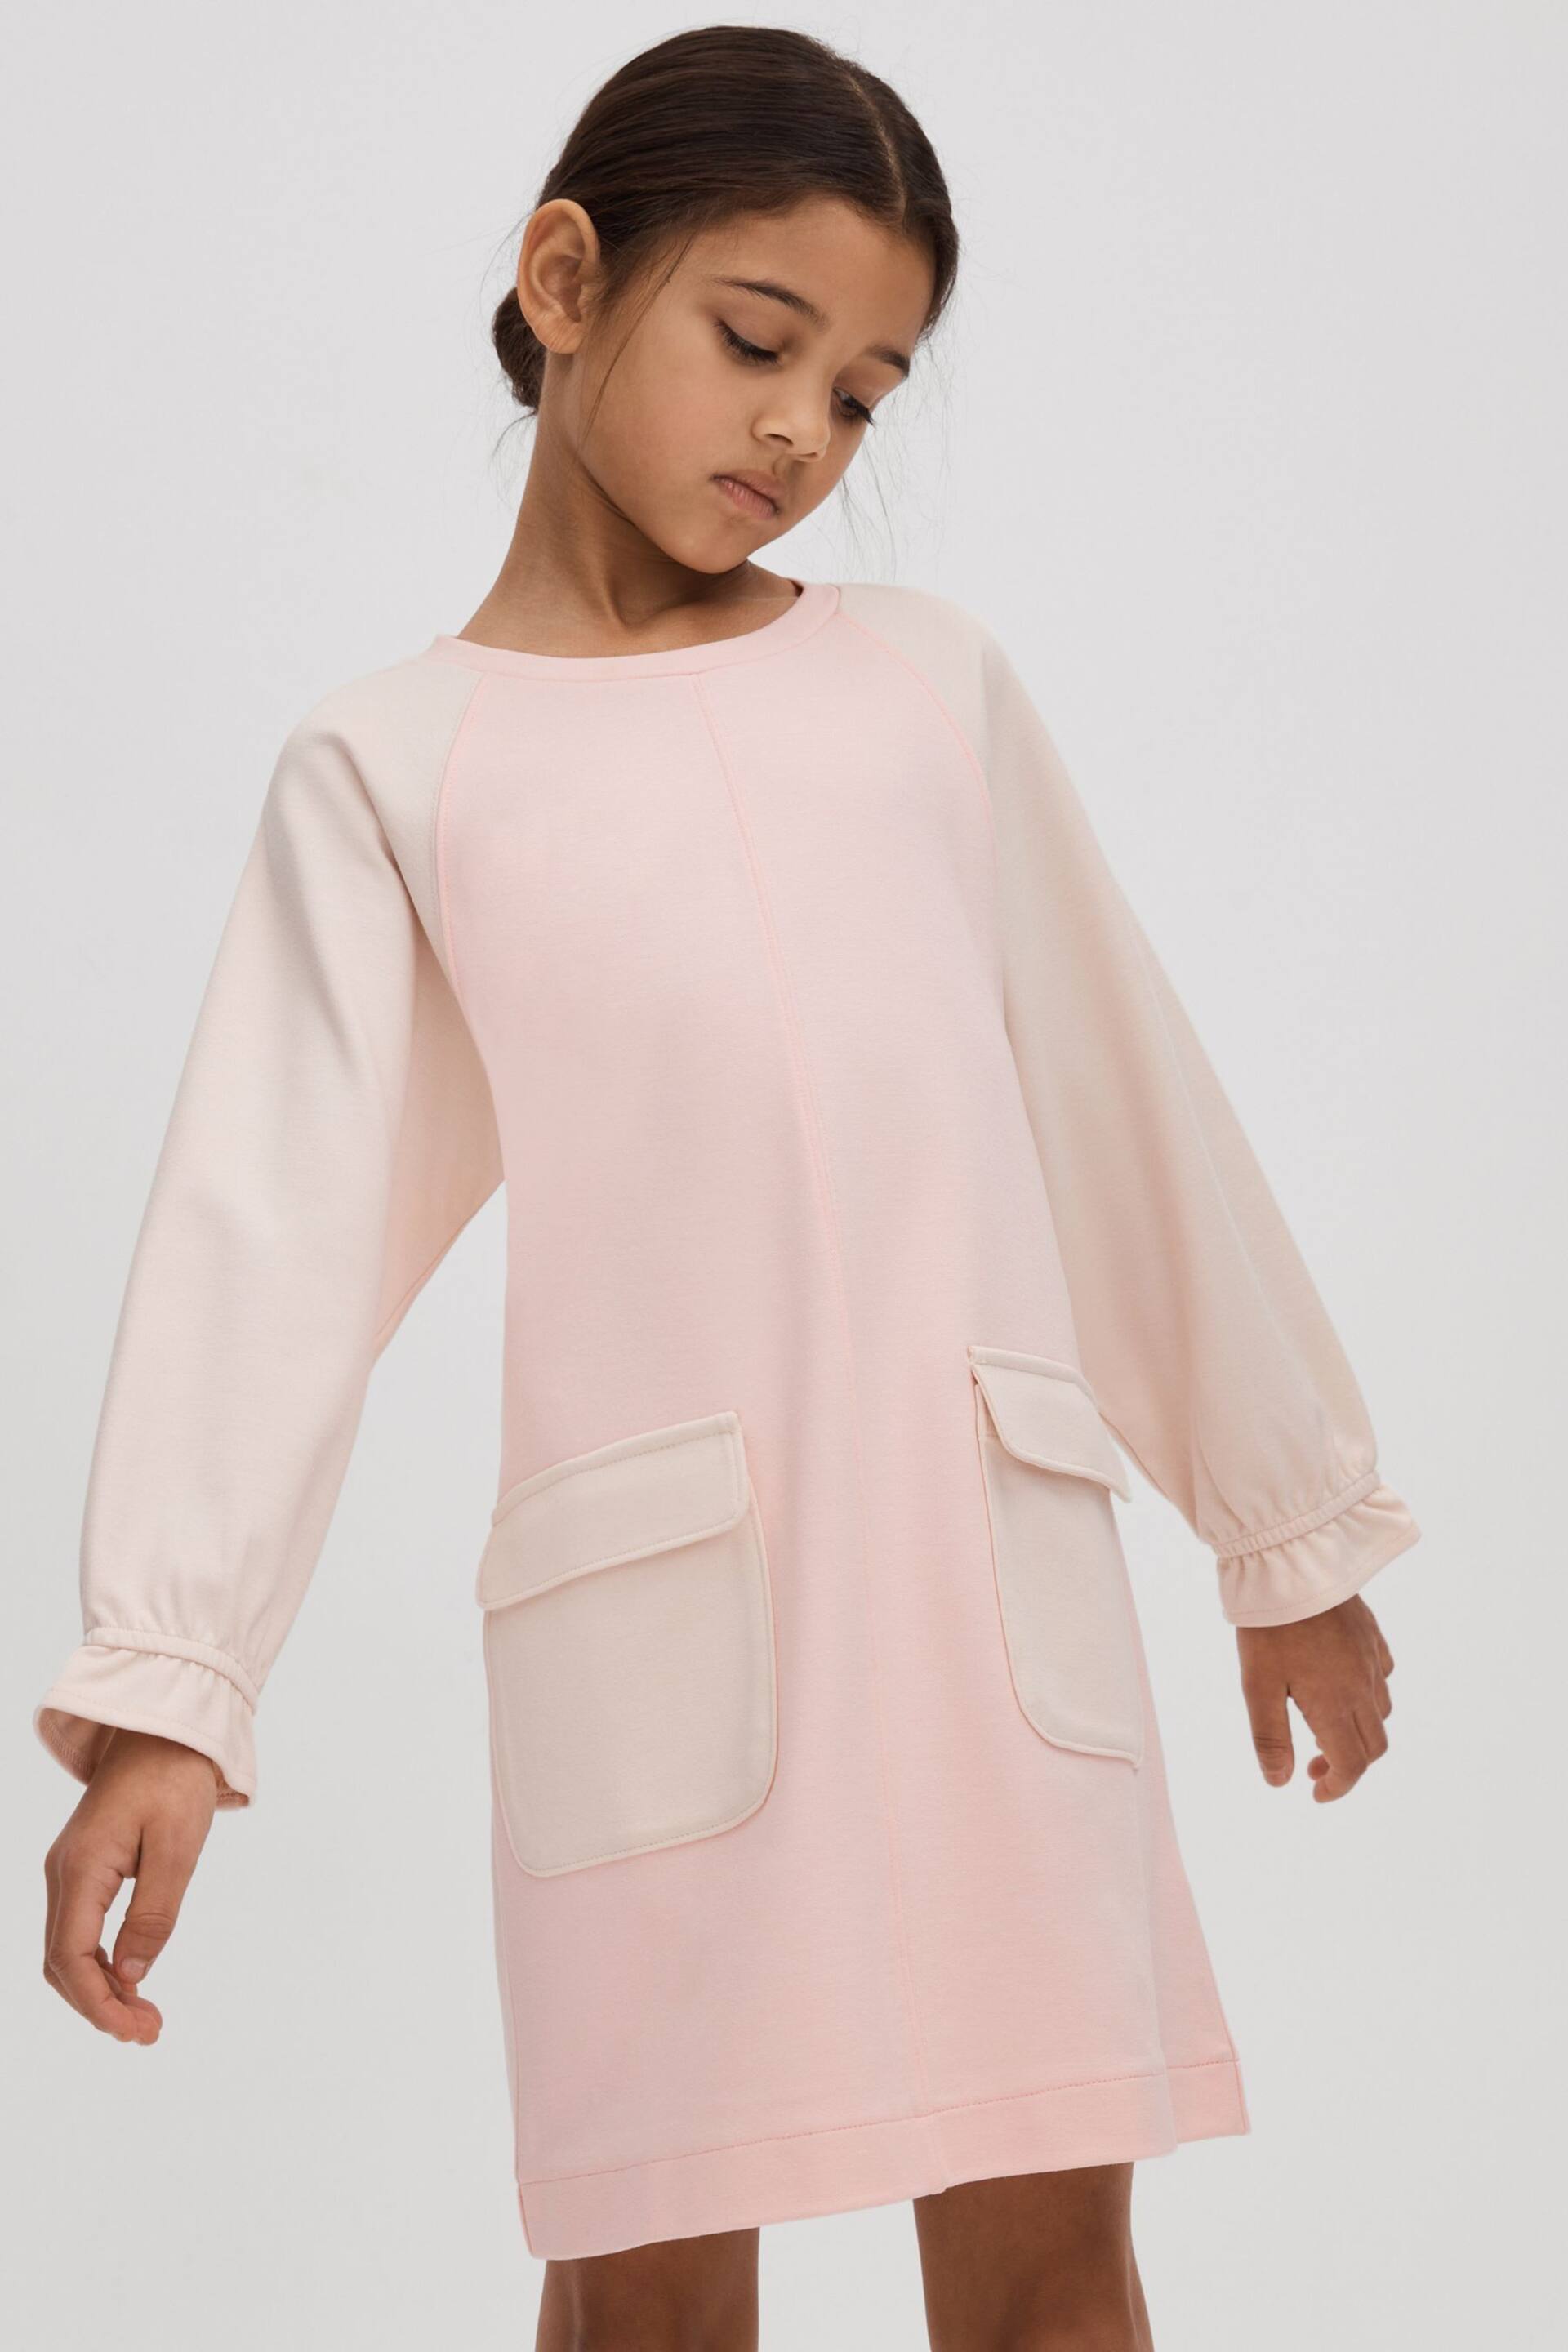 Reiss Pink Courtney Junior Colourblock Jersey Dress - Image 3 of 4